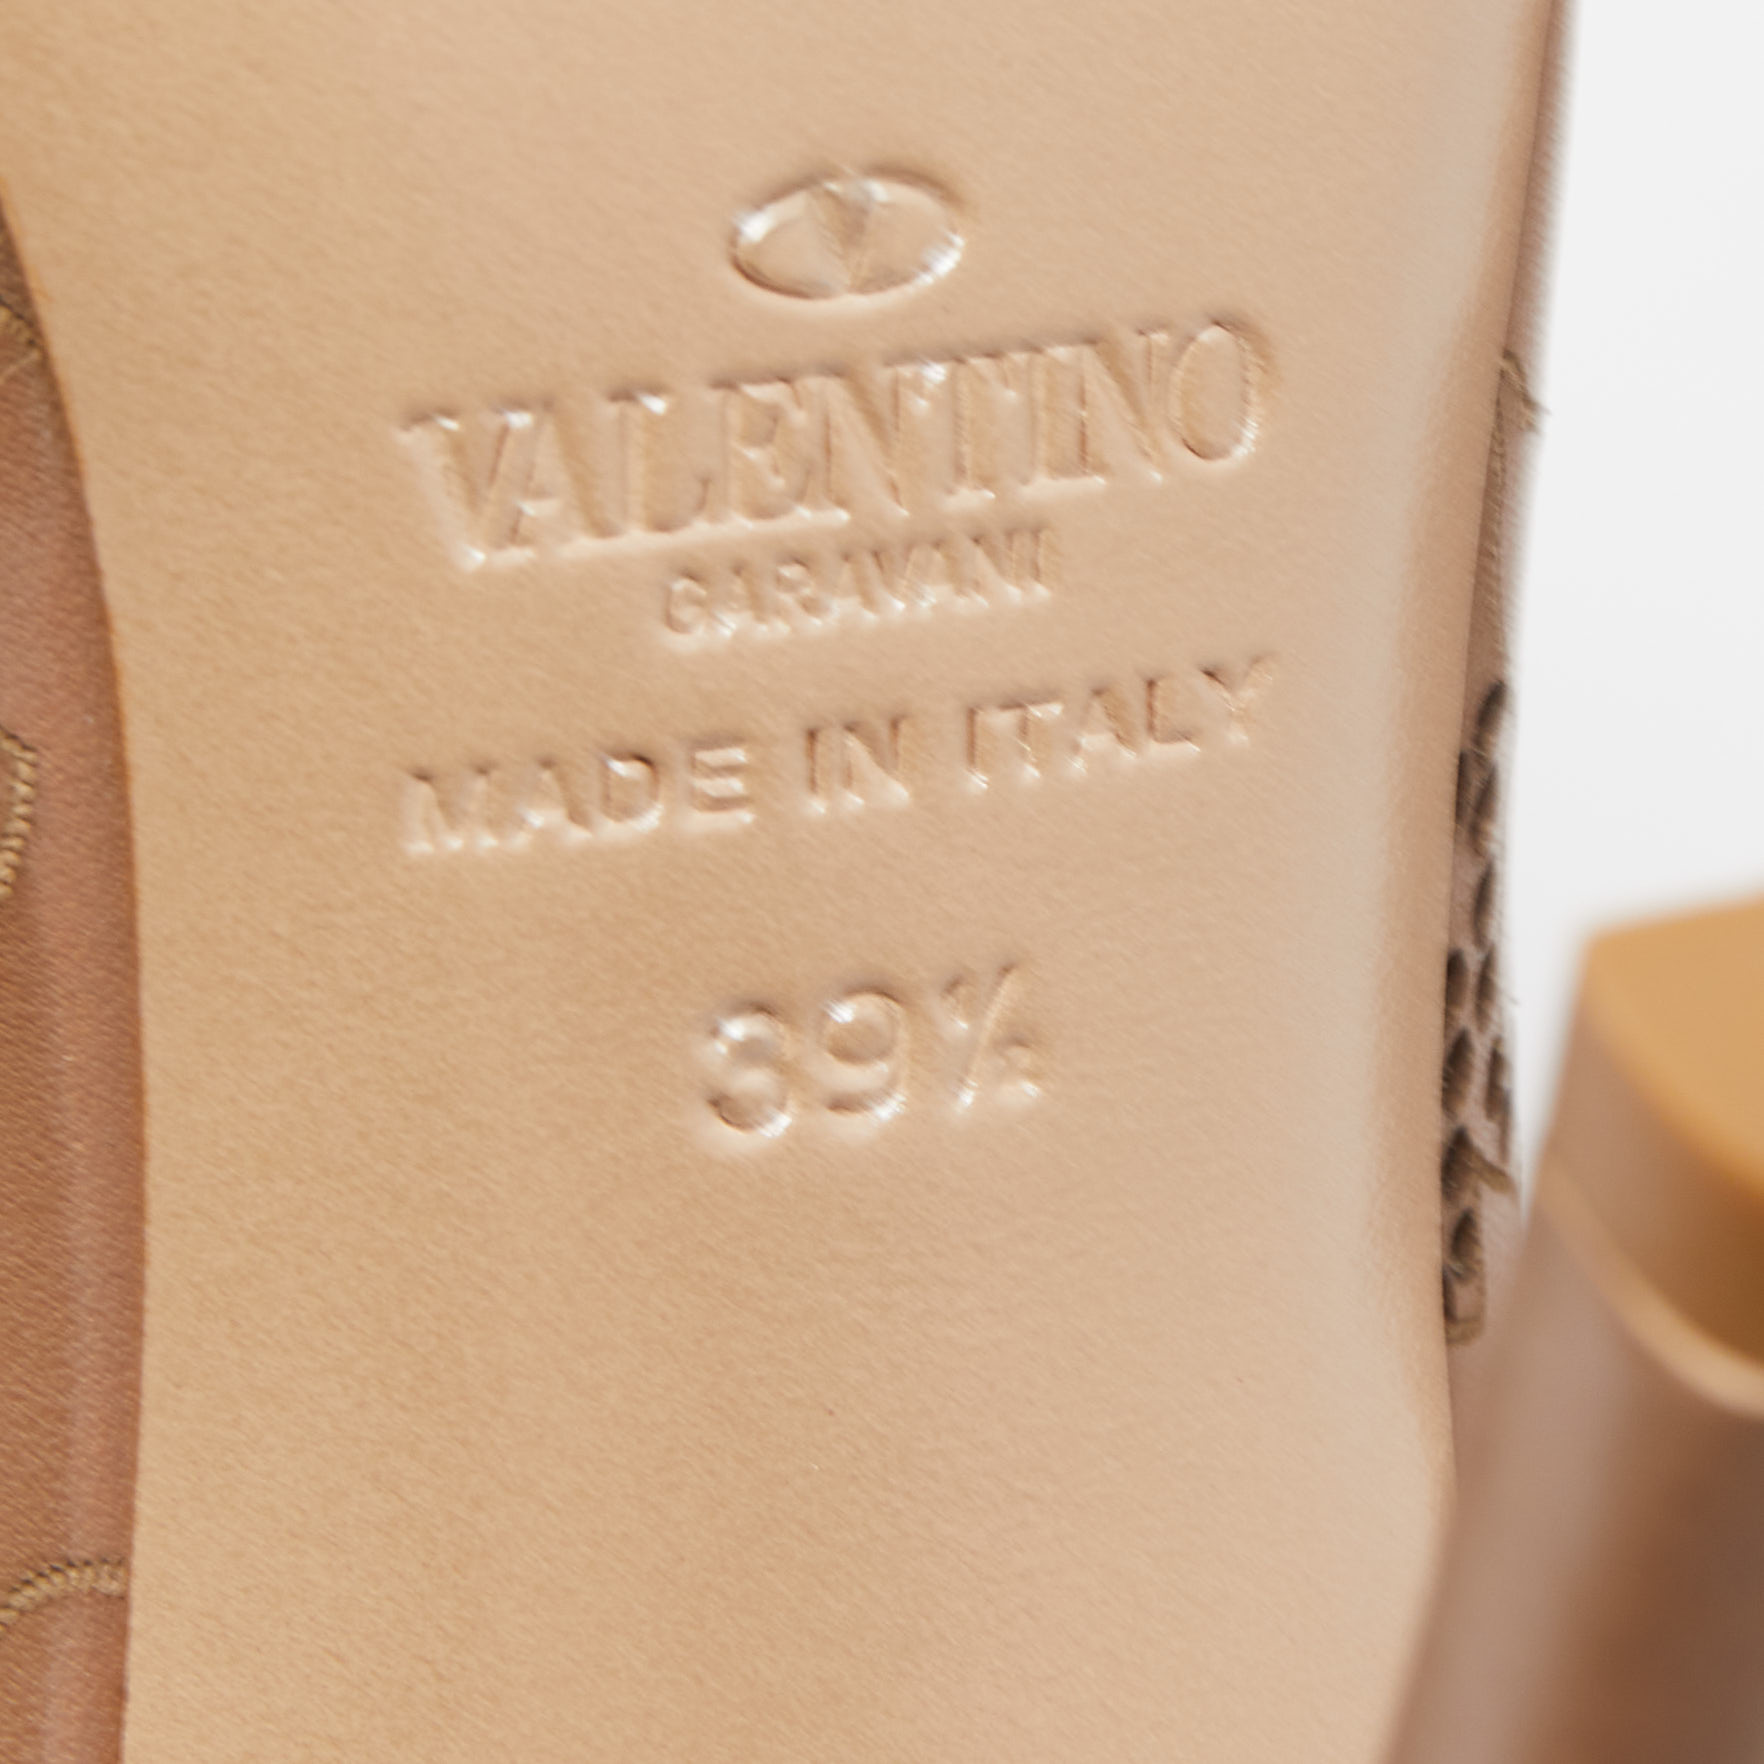 Valentino Beige Laser Cut Leather Platform Ankle Booties Size 39.5